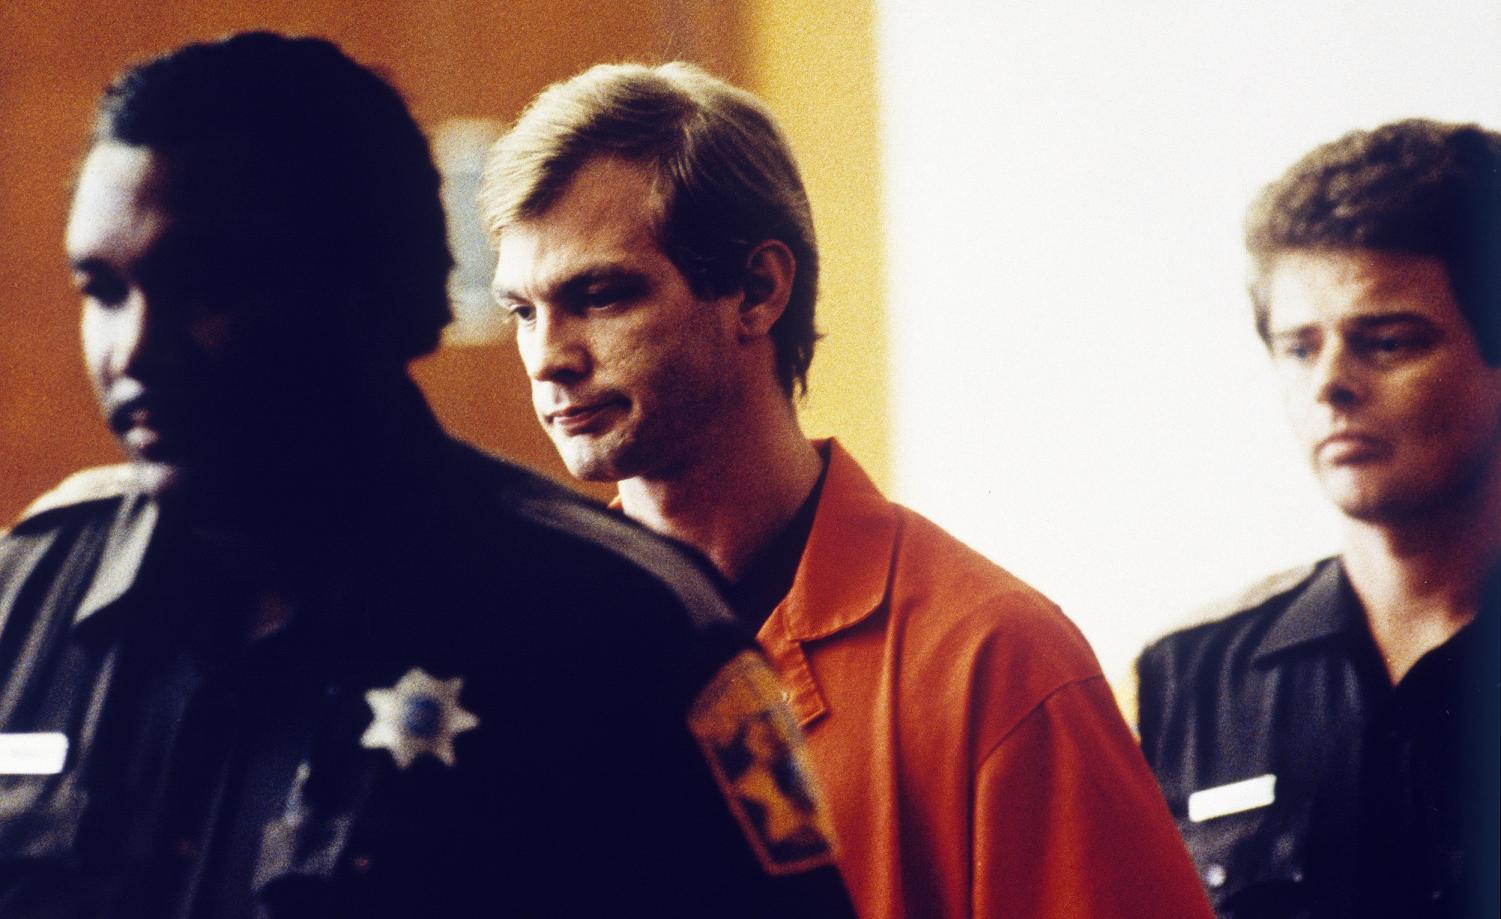 Jeffrey Dahmer Akron Ohio: Serial killer subject of new Netflix series